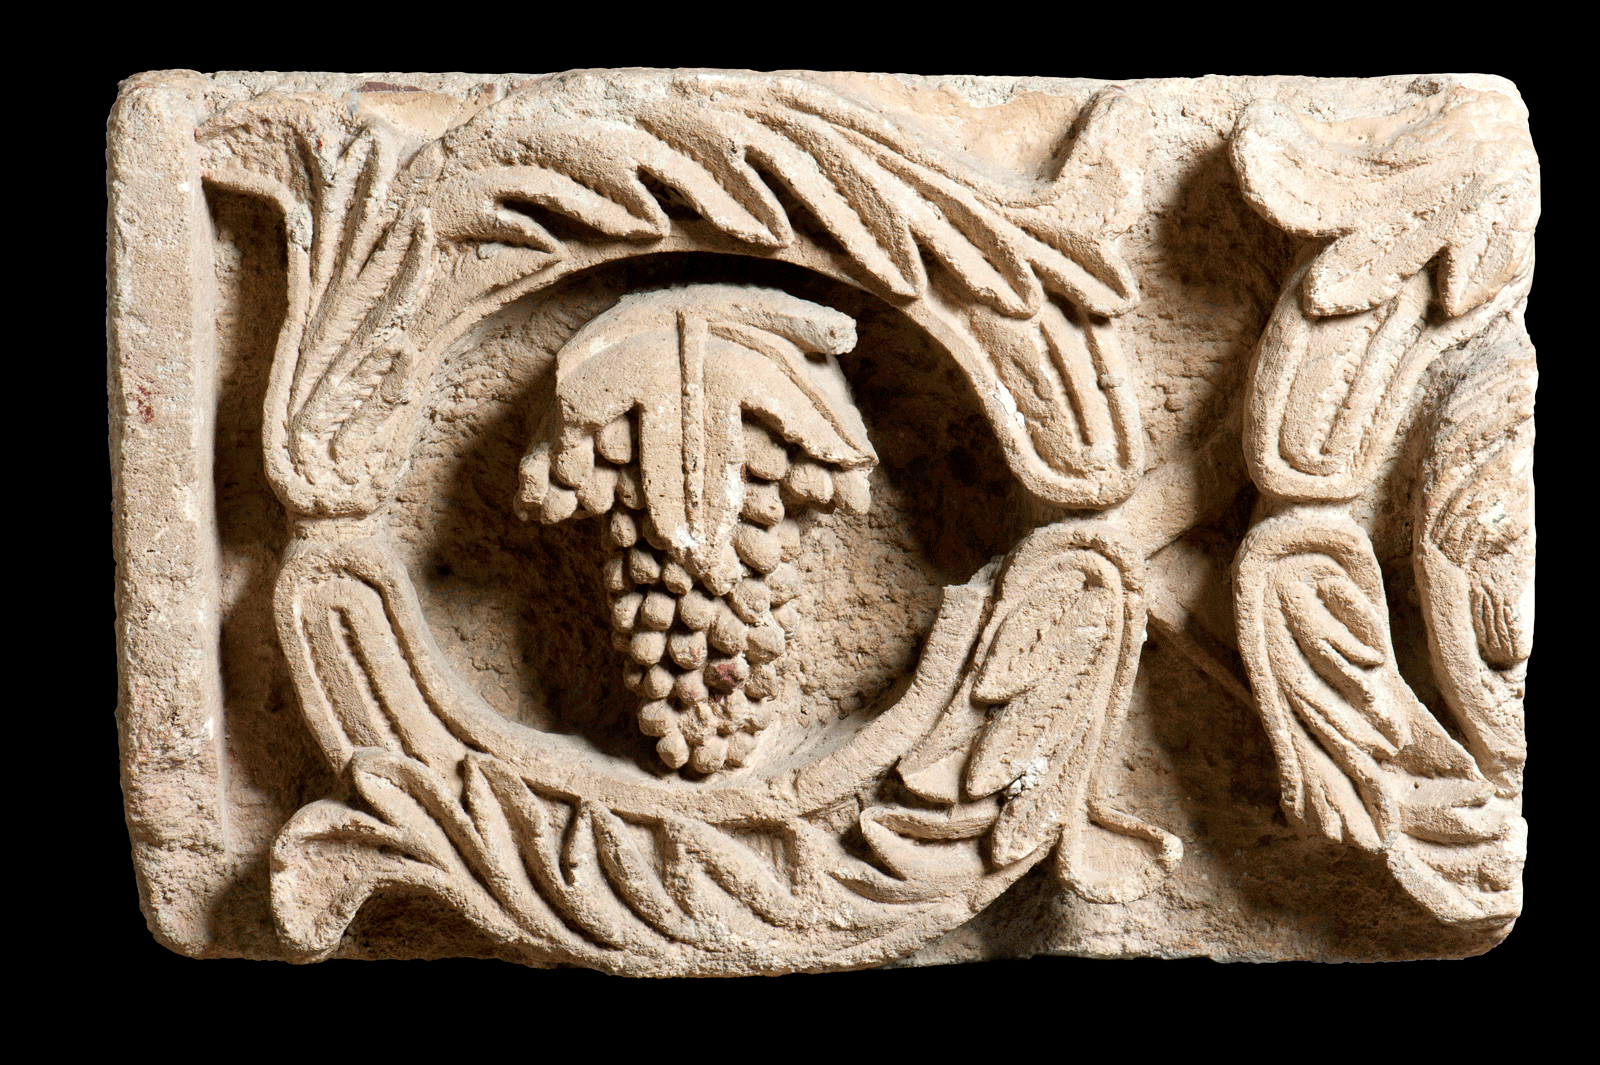 Vine scroll frieze fragment from Period III Altar platform at Khirbet et-Tannur © Juan Orlandis Habsburgo